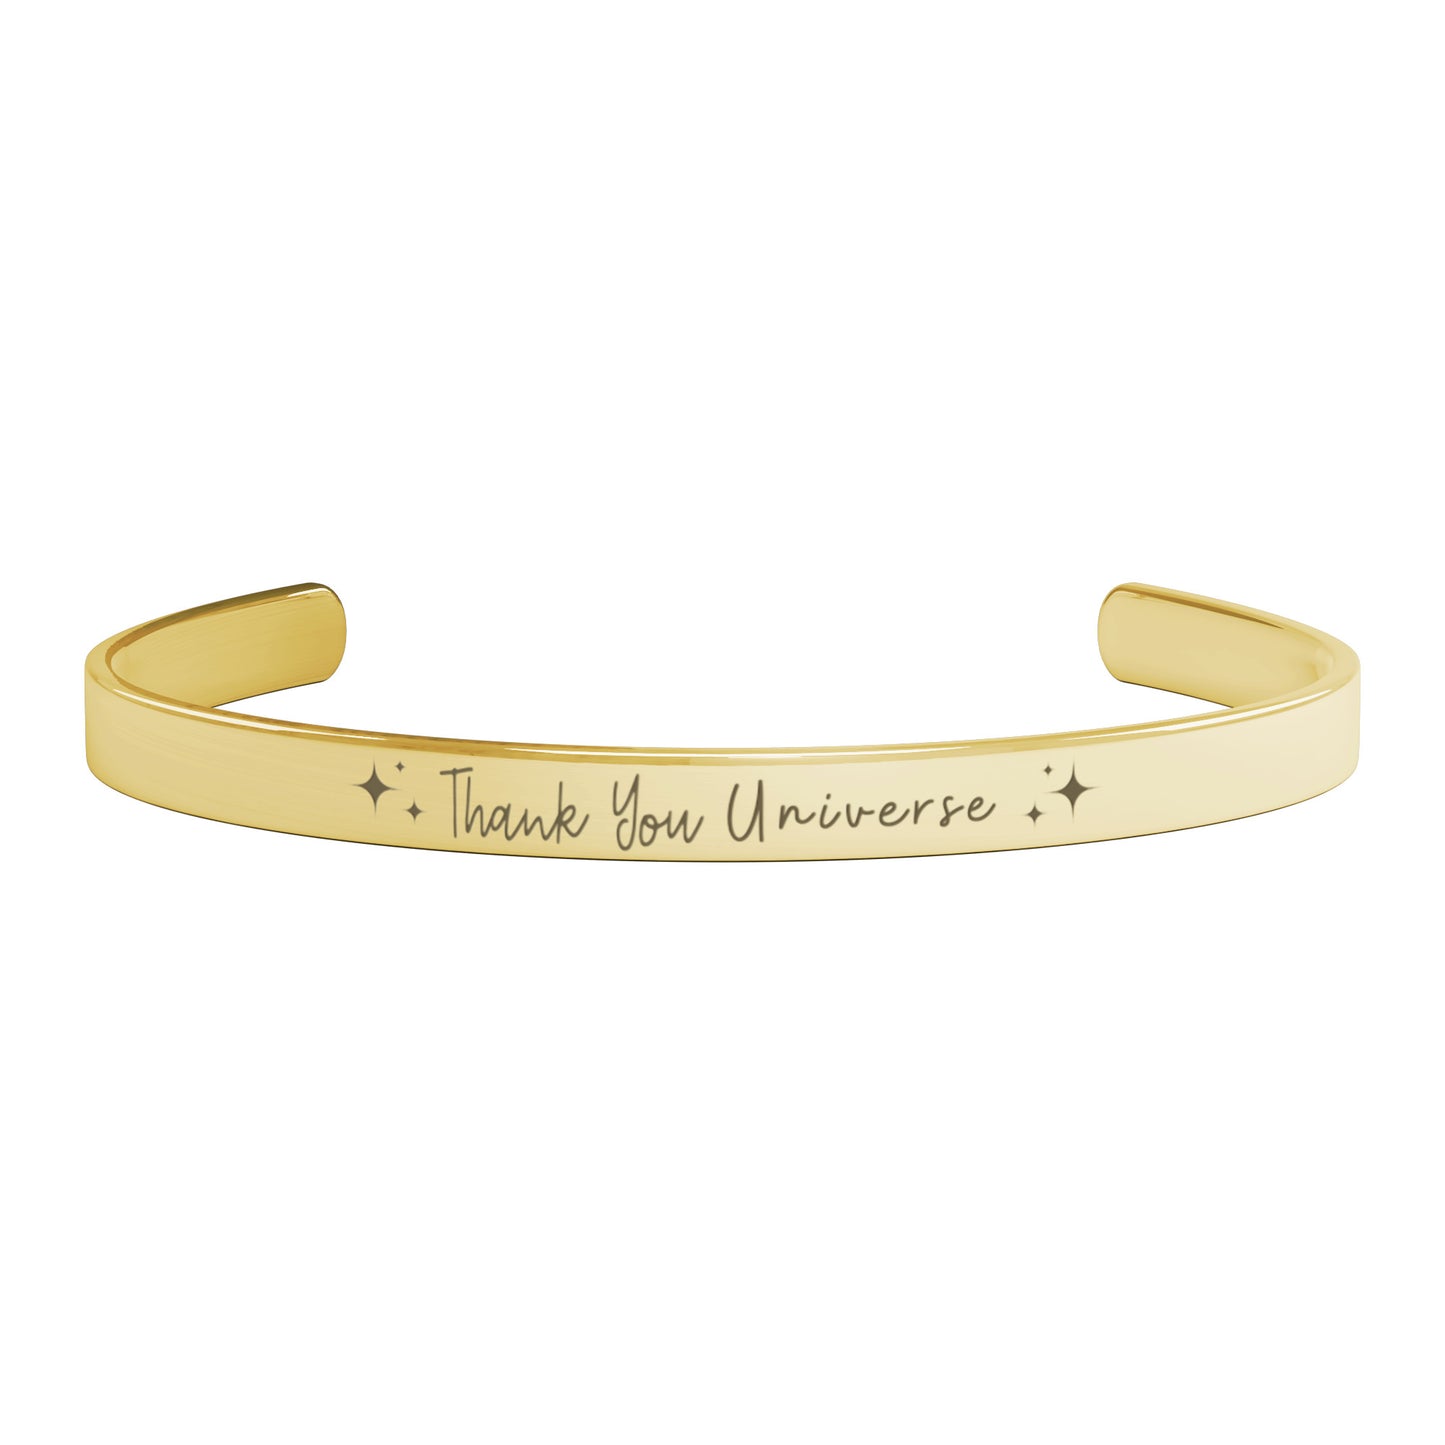 thank you universe gold bracelet